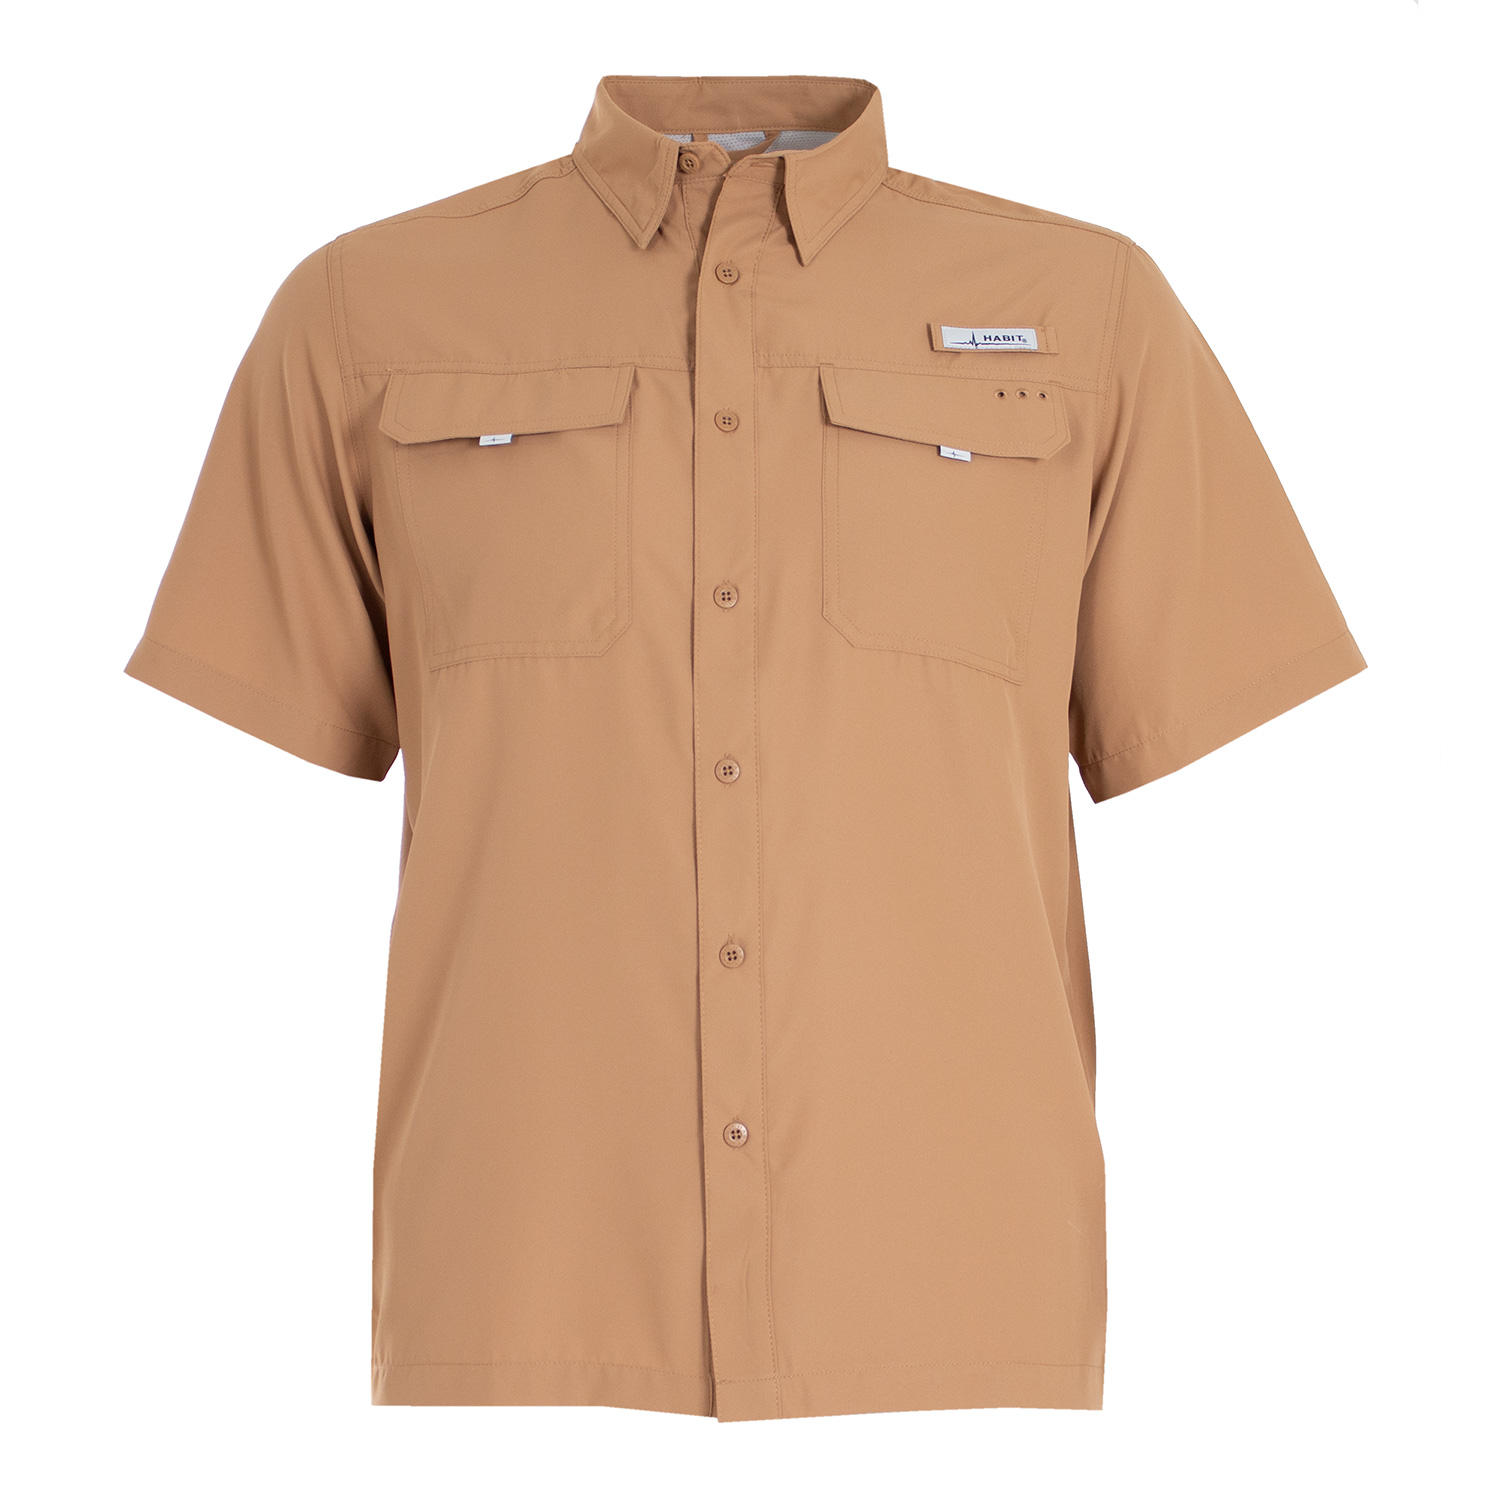 Habit Men's UPF 40+ UV Protection Short-Sleeve Fishing Shirt - Tobacco Brown S